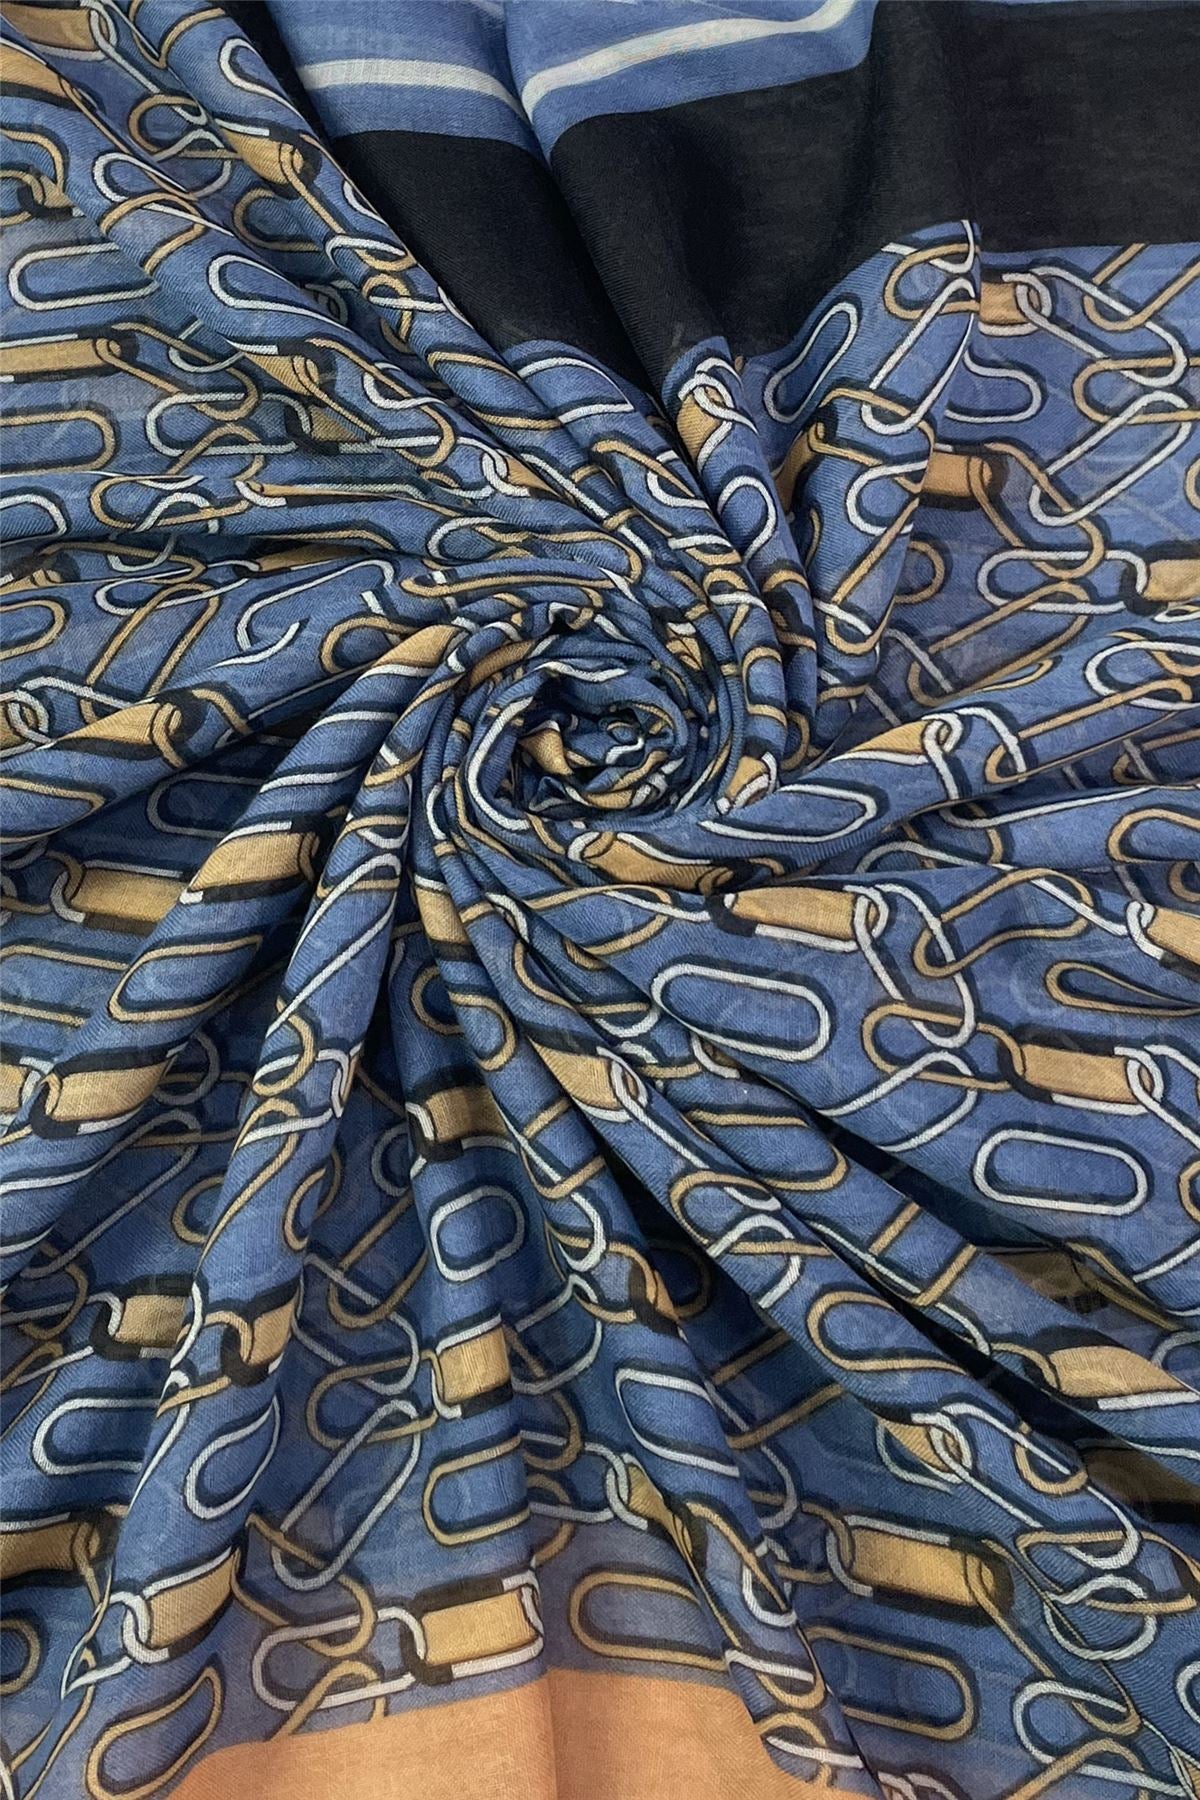 Chain Link Fashion Print Scarf - Blue - Oxford Blue